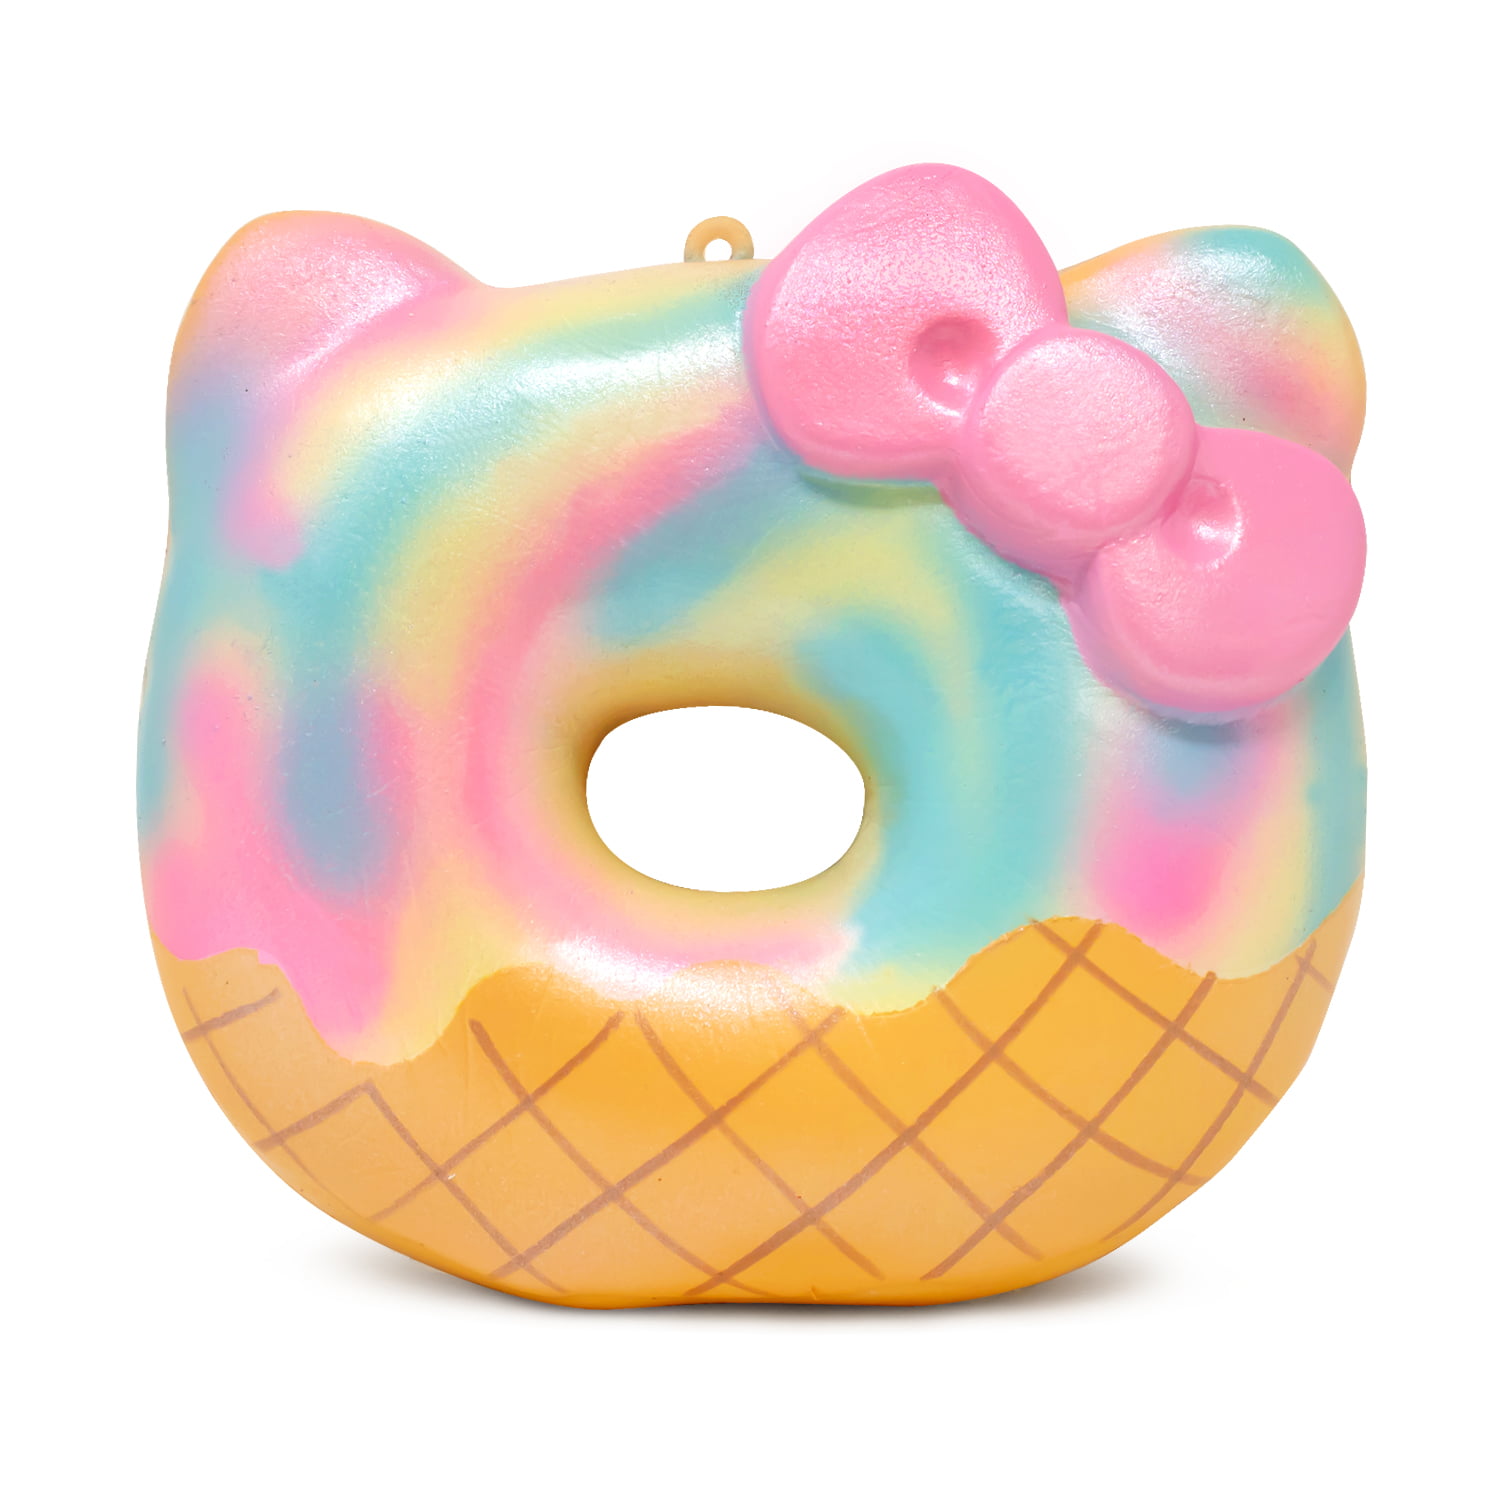 Sanrio Hello Kitty Donuts Shop Set Playset Toy Miniature Shopping Cute Kawaii